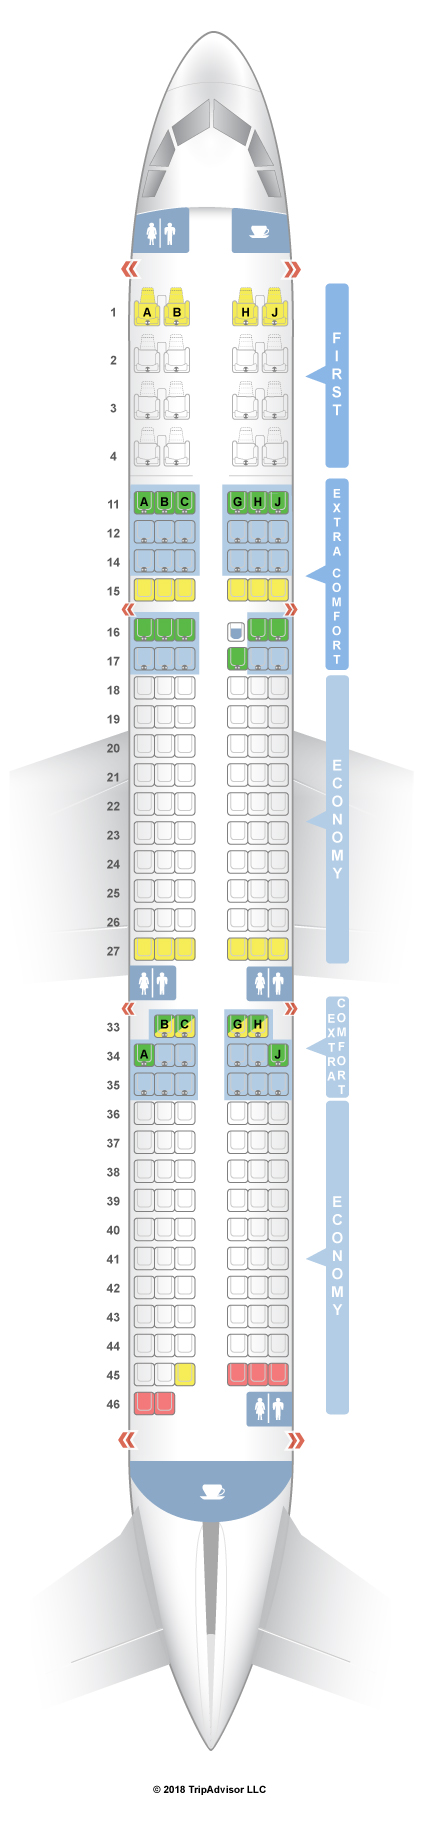 Hawaiian Airlines Airbus A321 Seating Chart